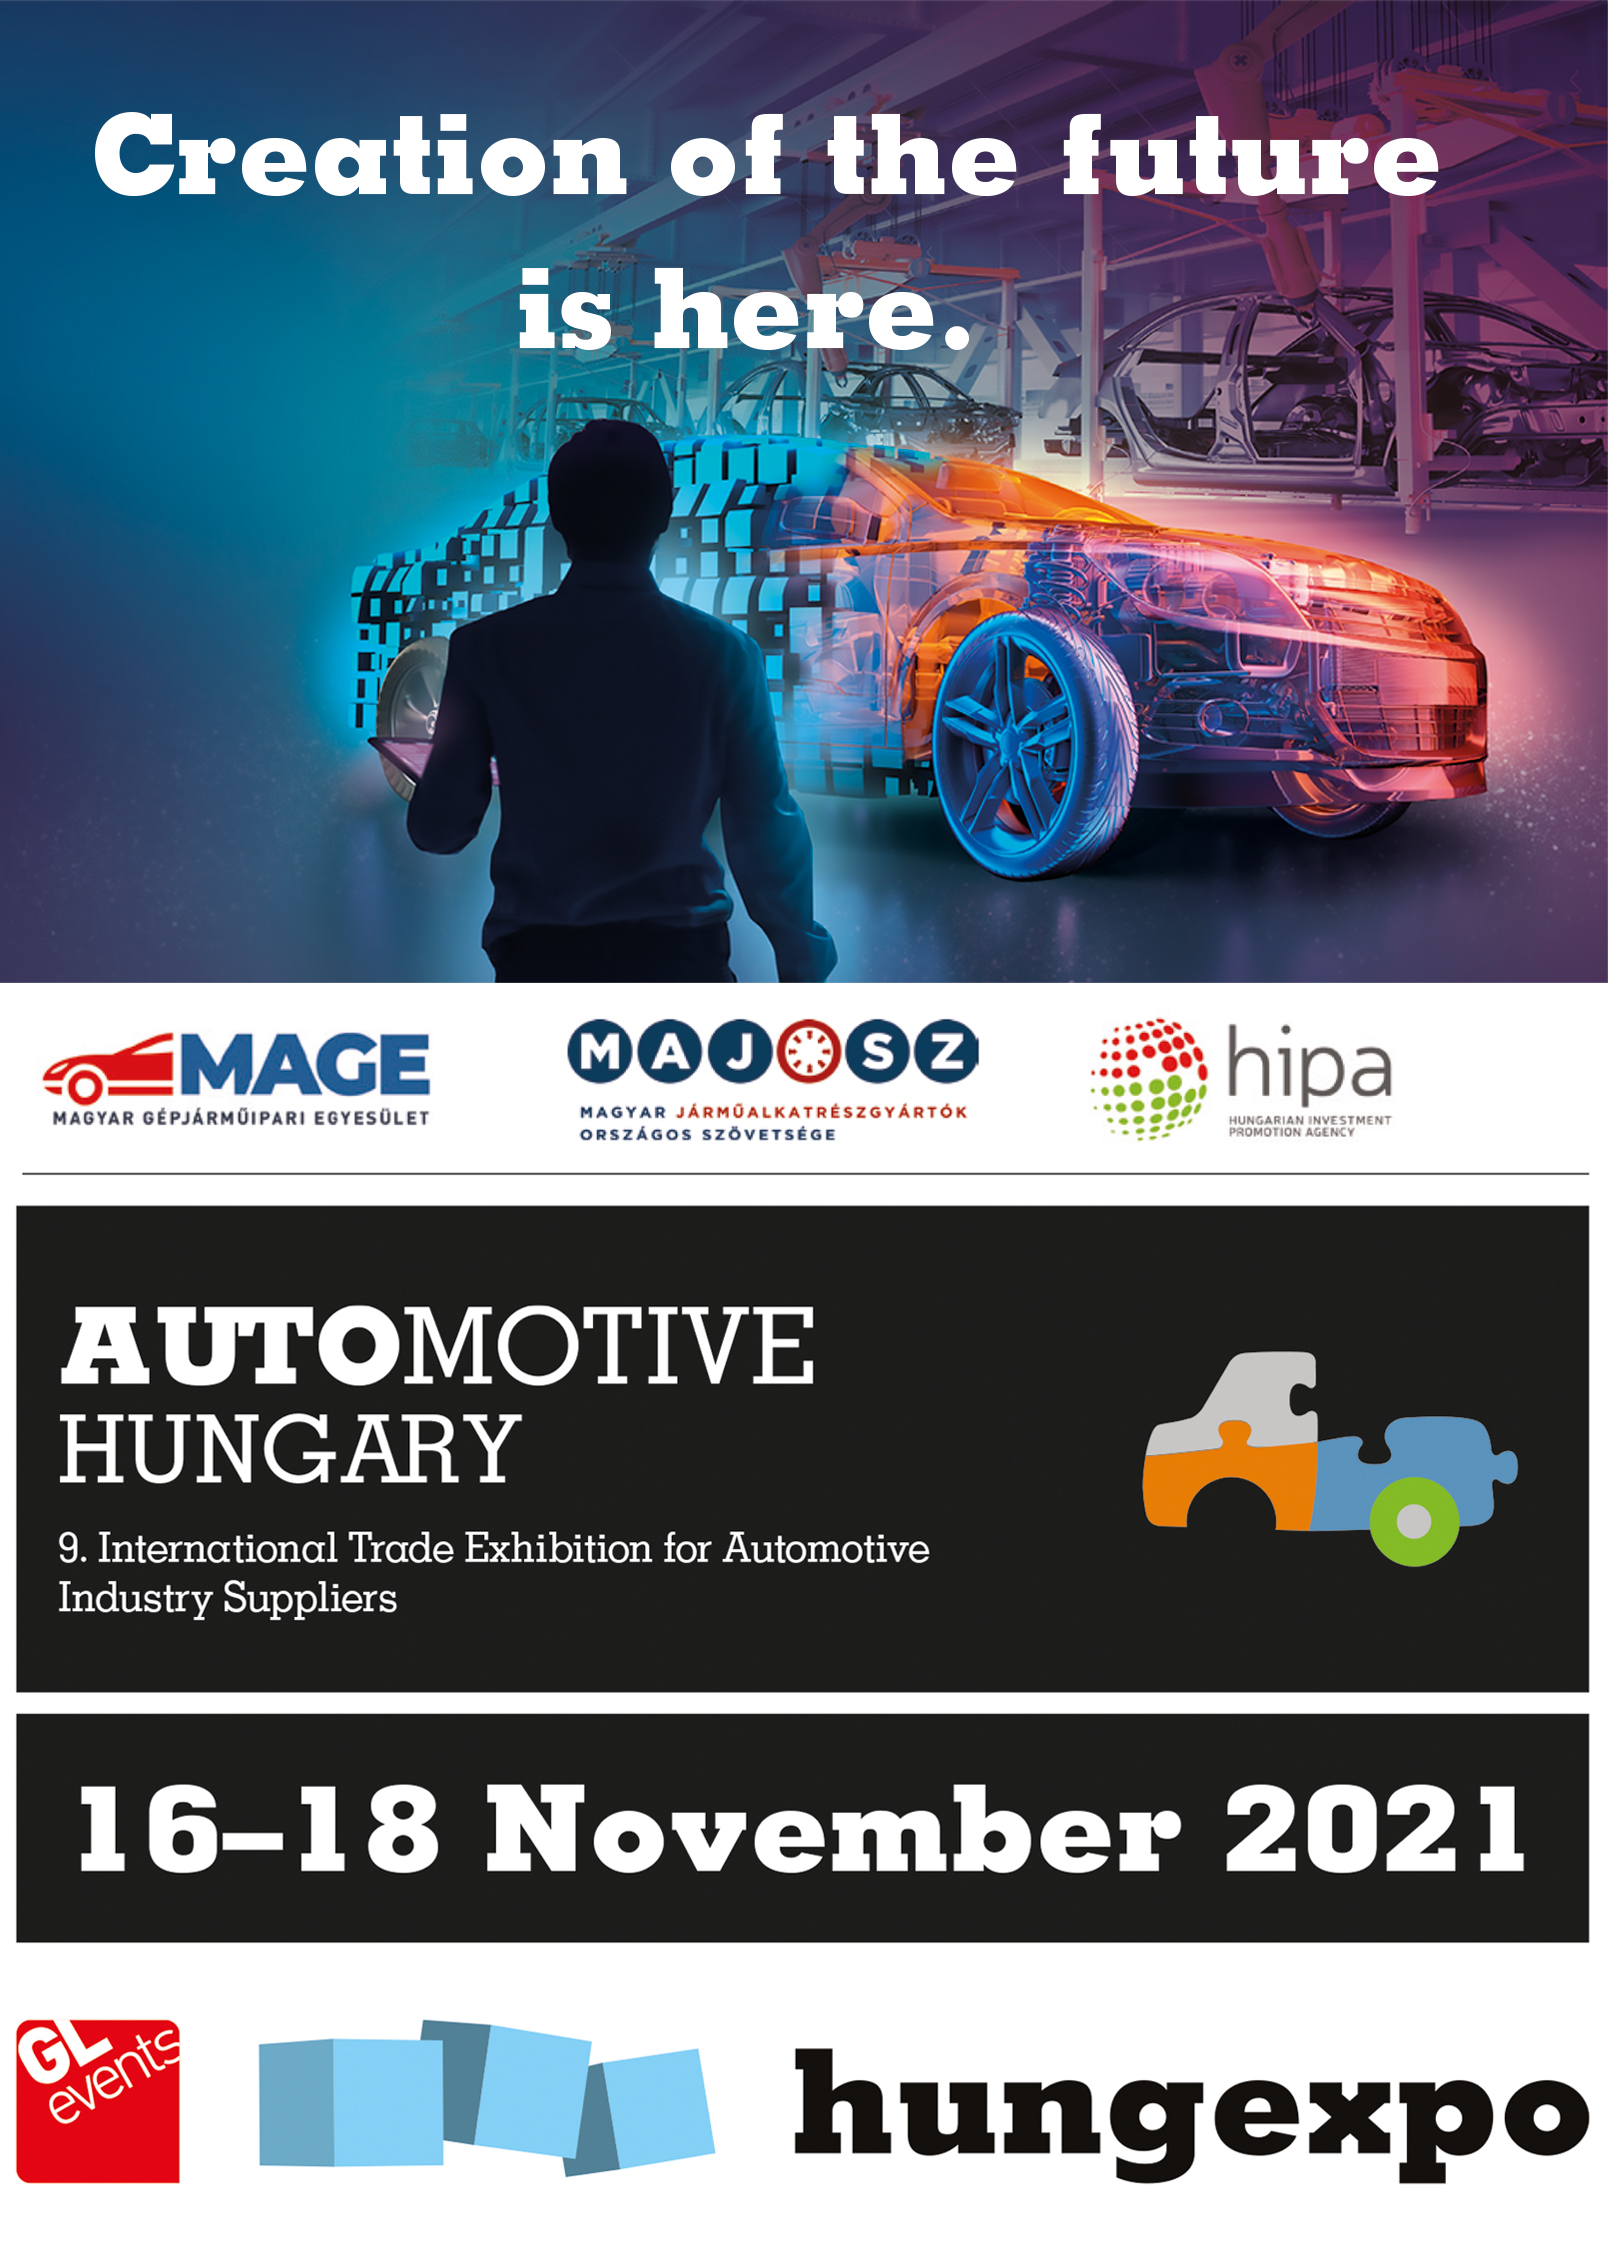 AUTOMOTIVE HUNGARY SAVE THE DATE 16-18 November 2021